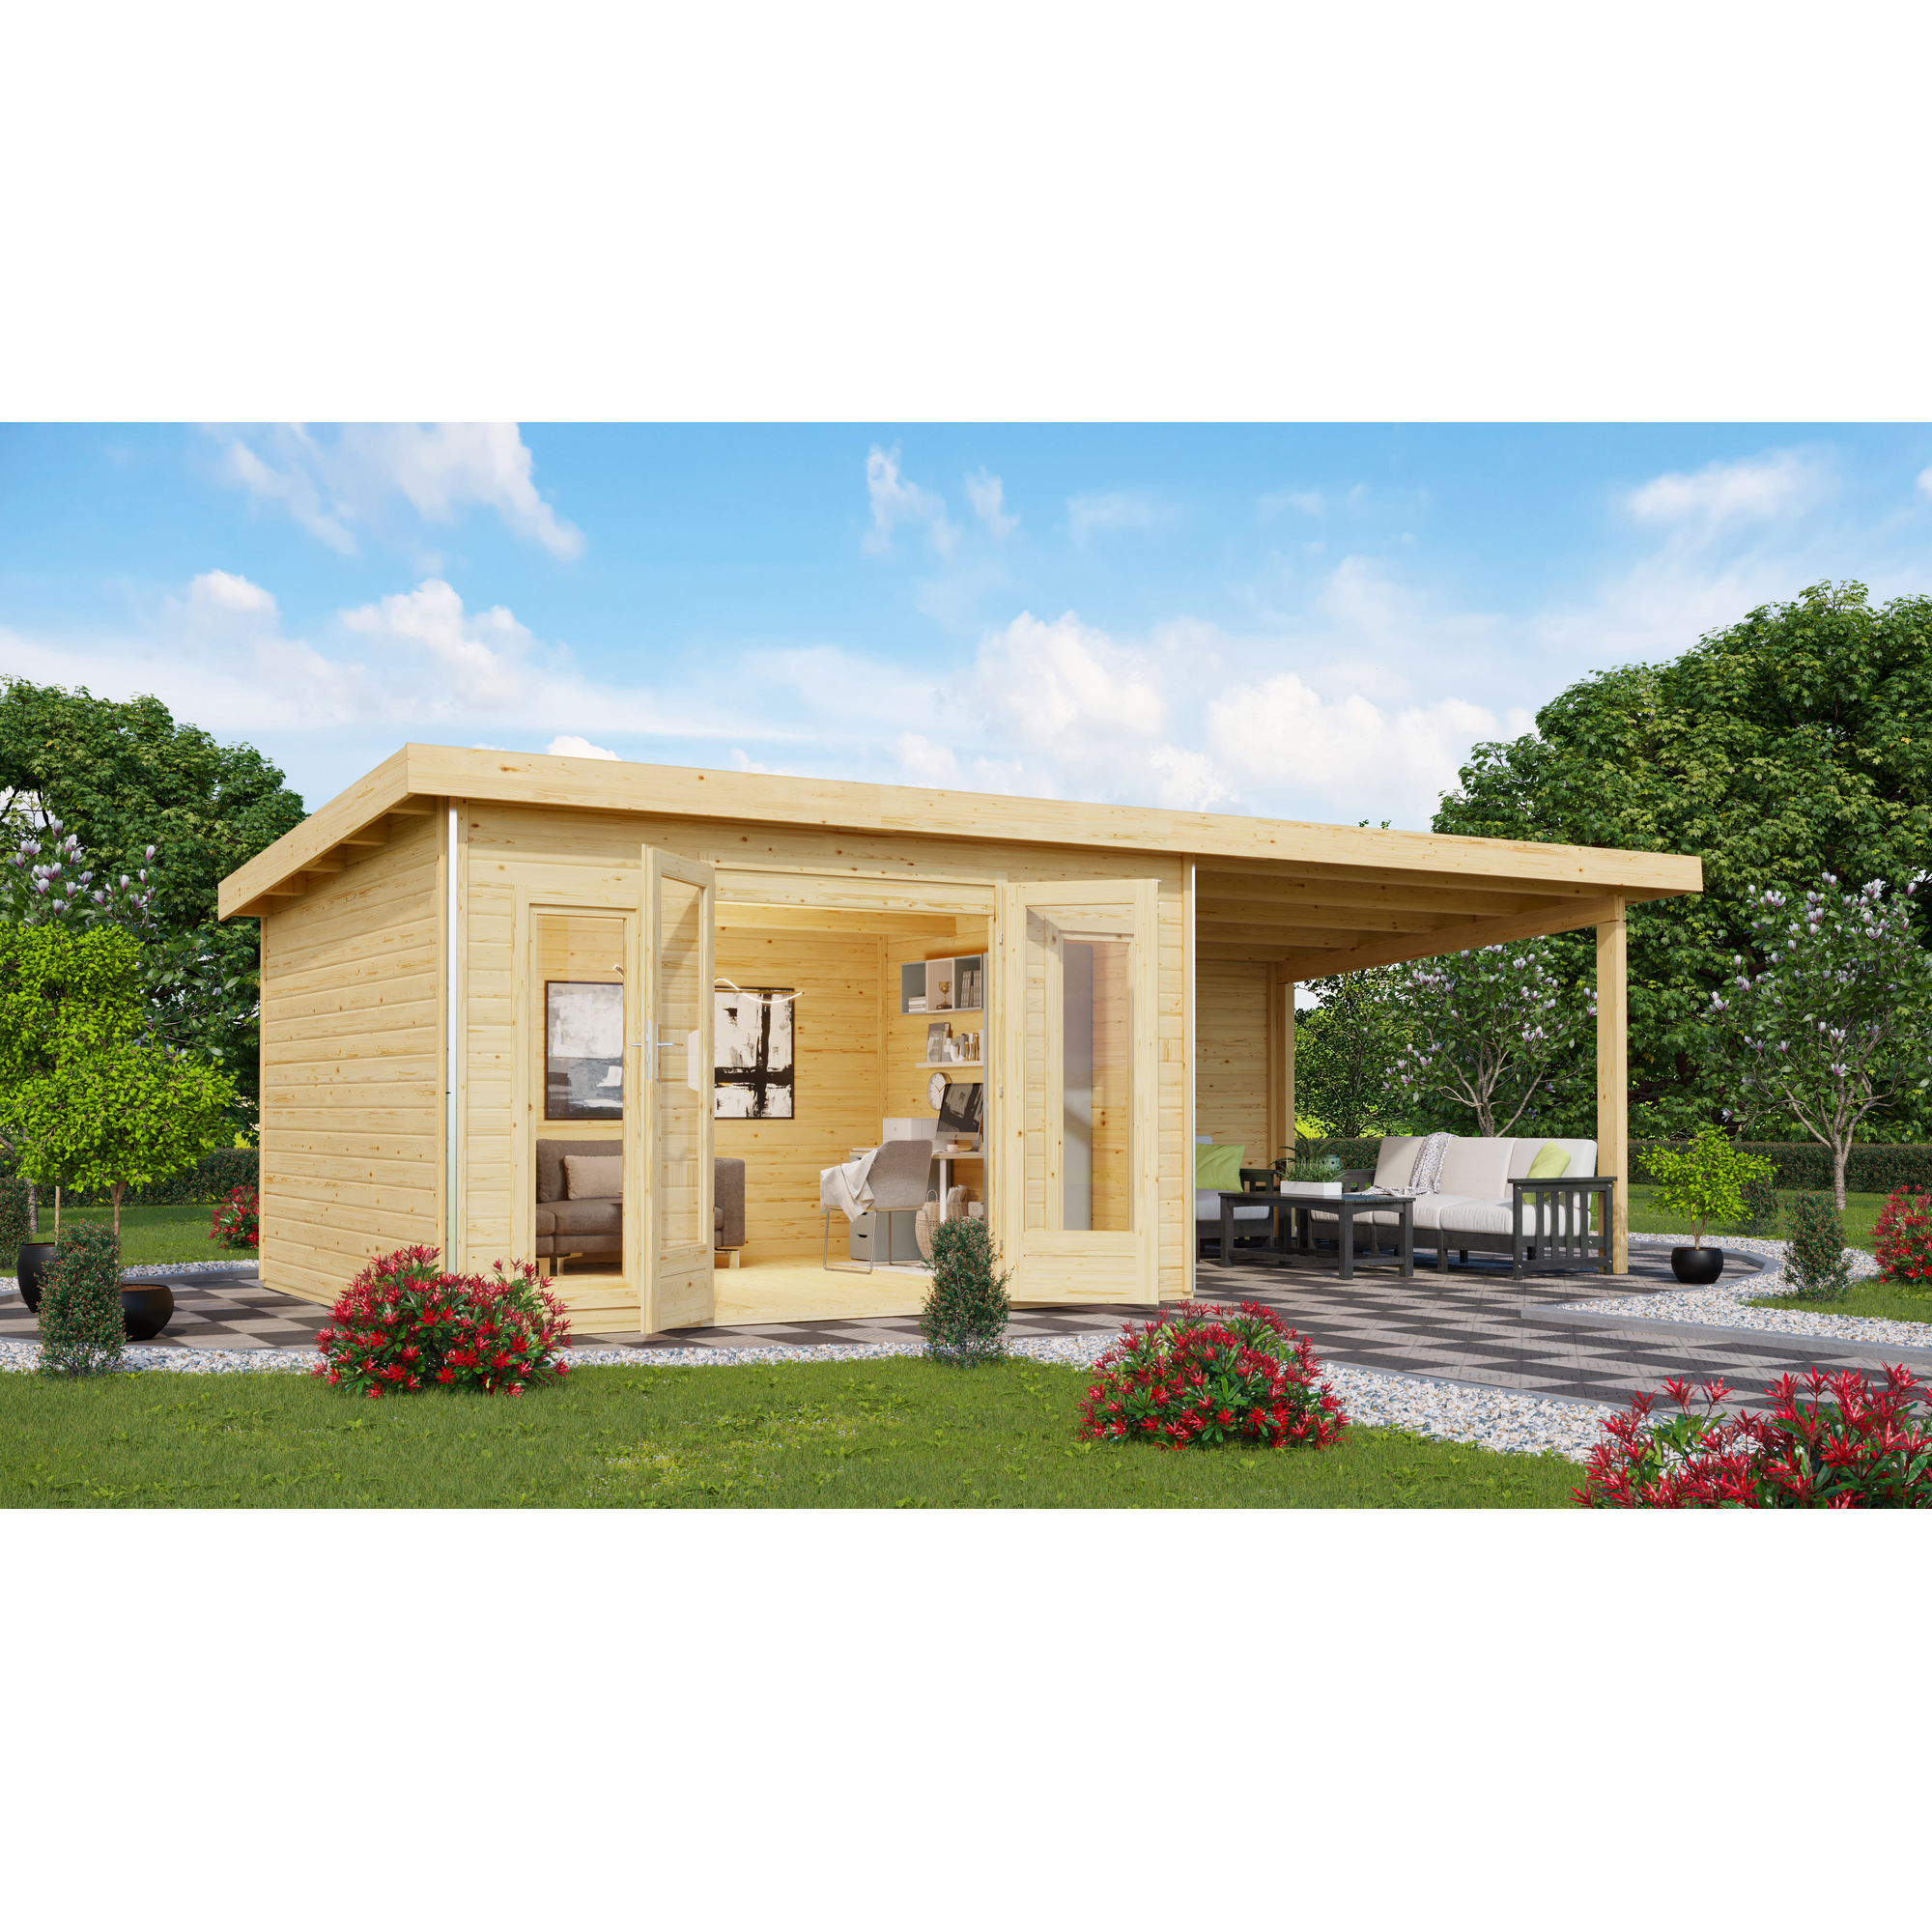 Premium-Gartenhaus-Set 'Borsuma 2' natur mit Anbaudach und Rückwand 724 x 331,5 x 229,5 cm + product picture